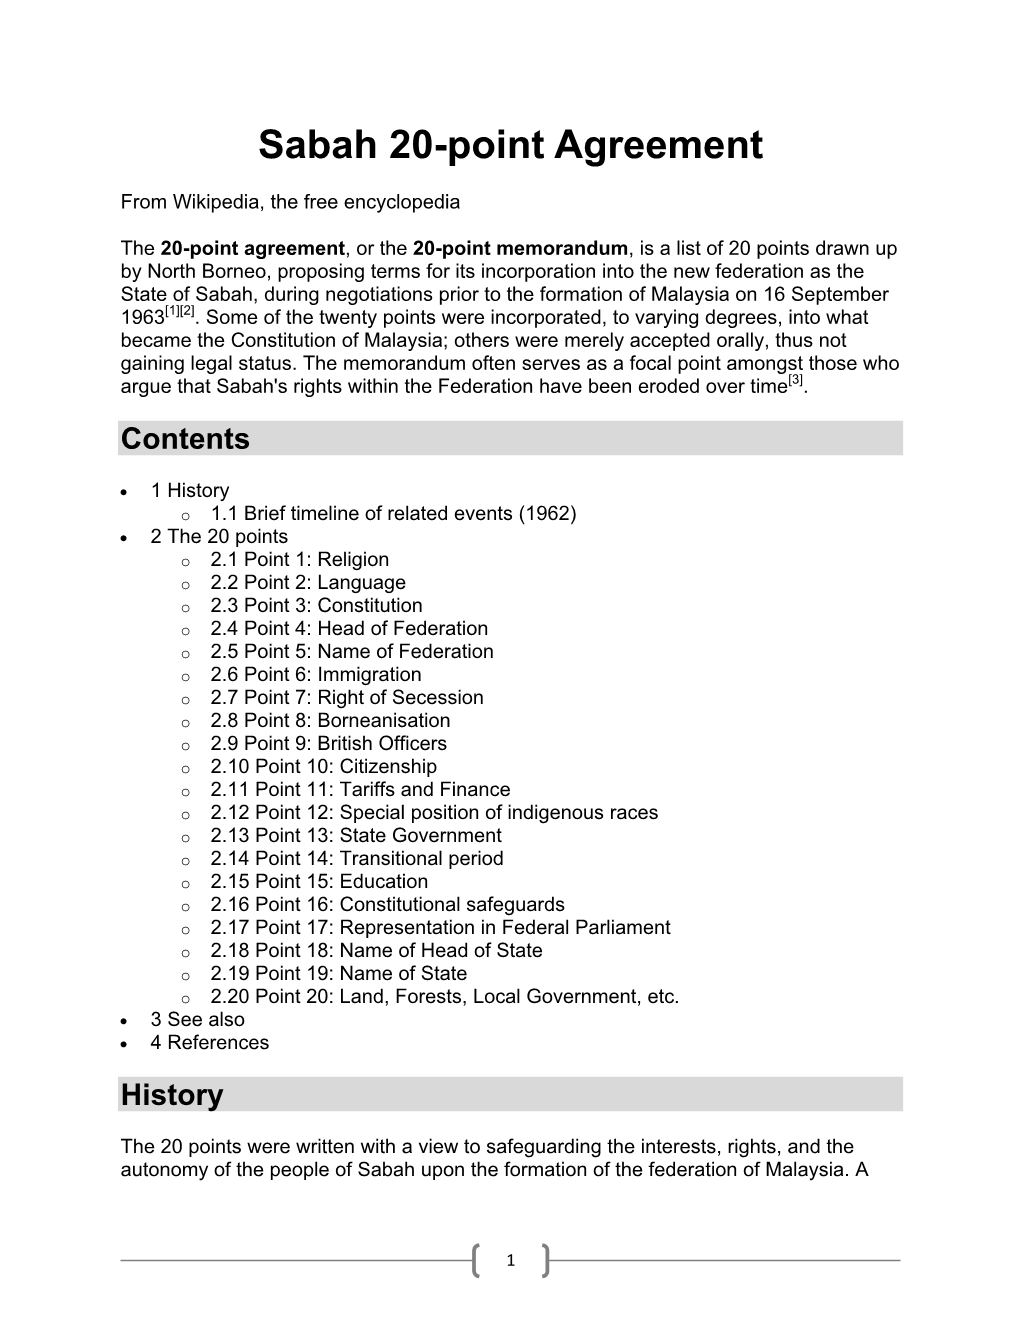 Sabah 20-Point Agreement